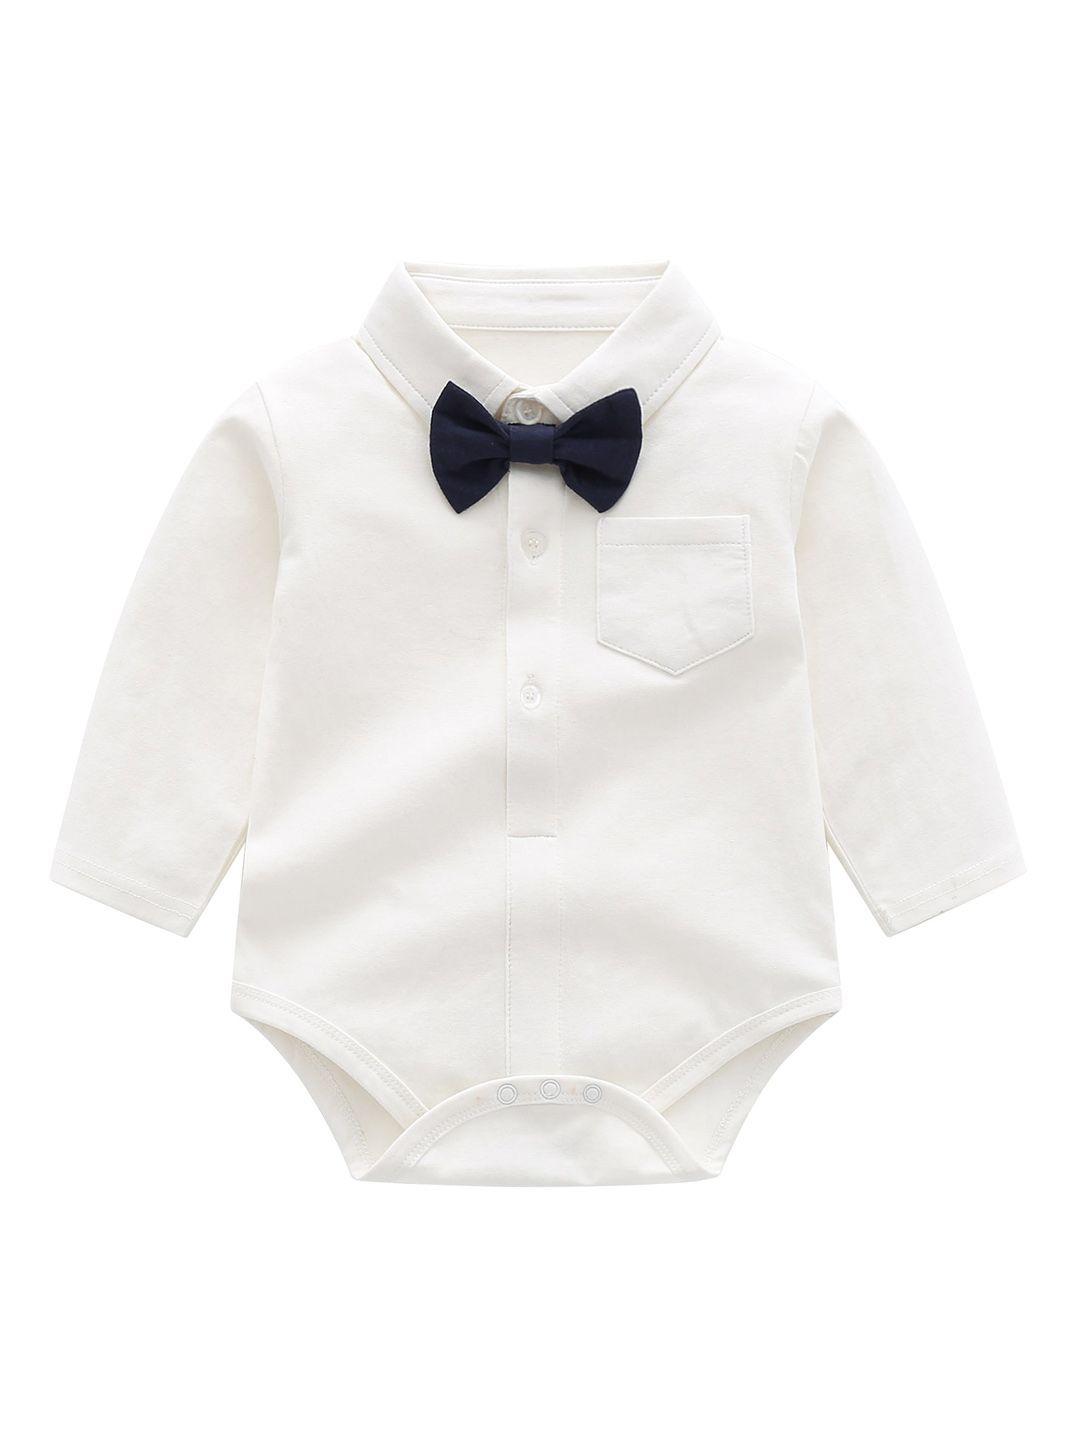 stylecast infants white cotton shirt style bodysuits